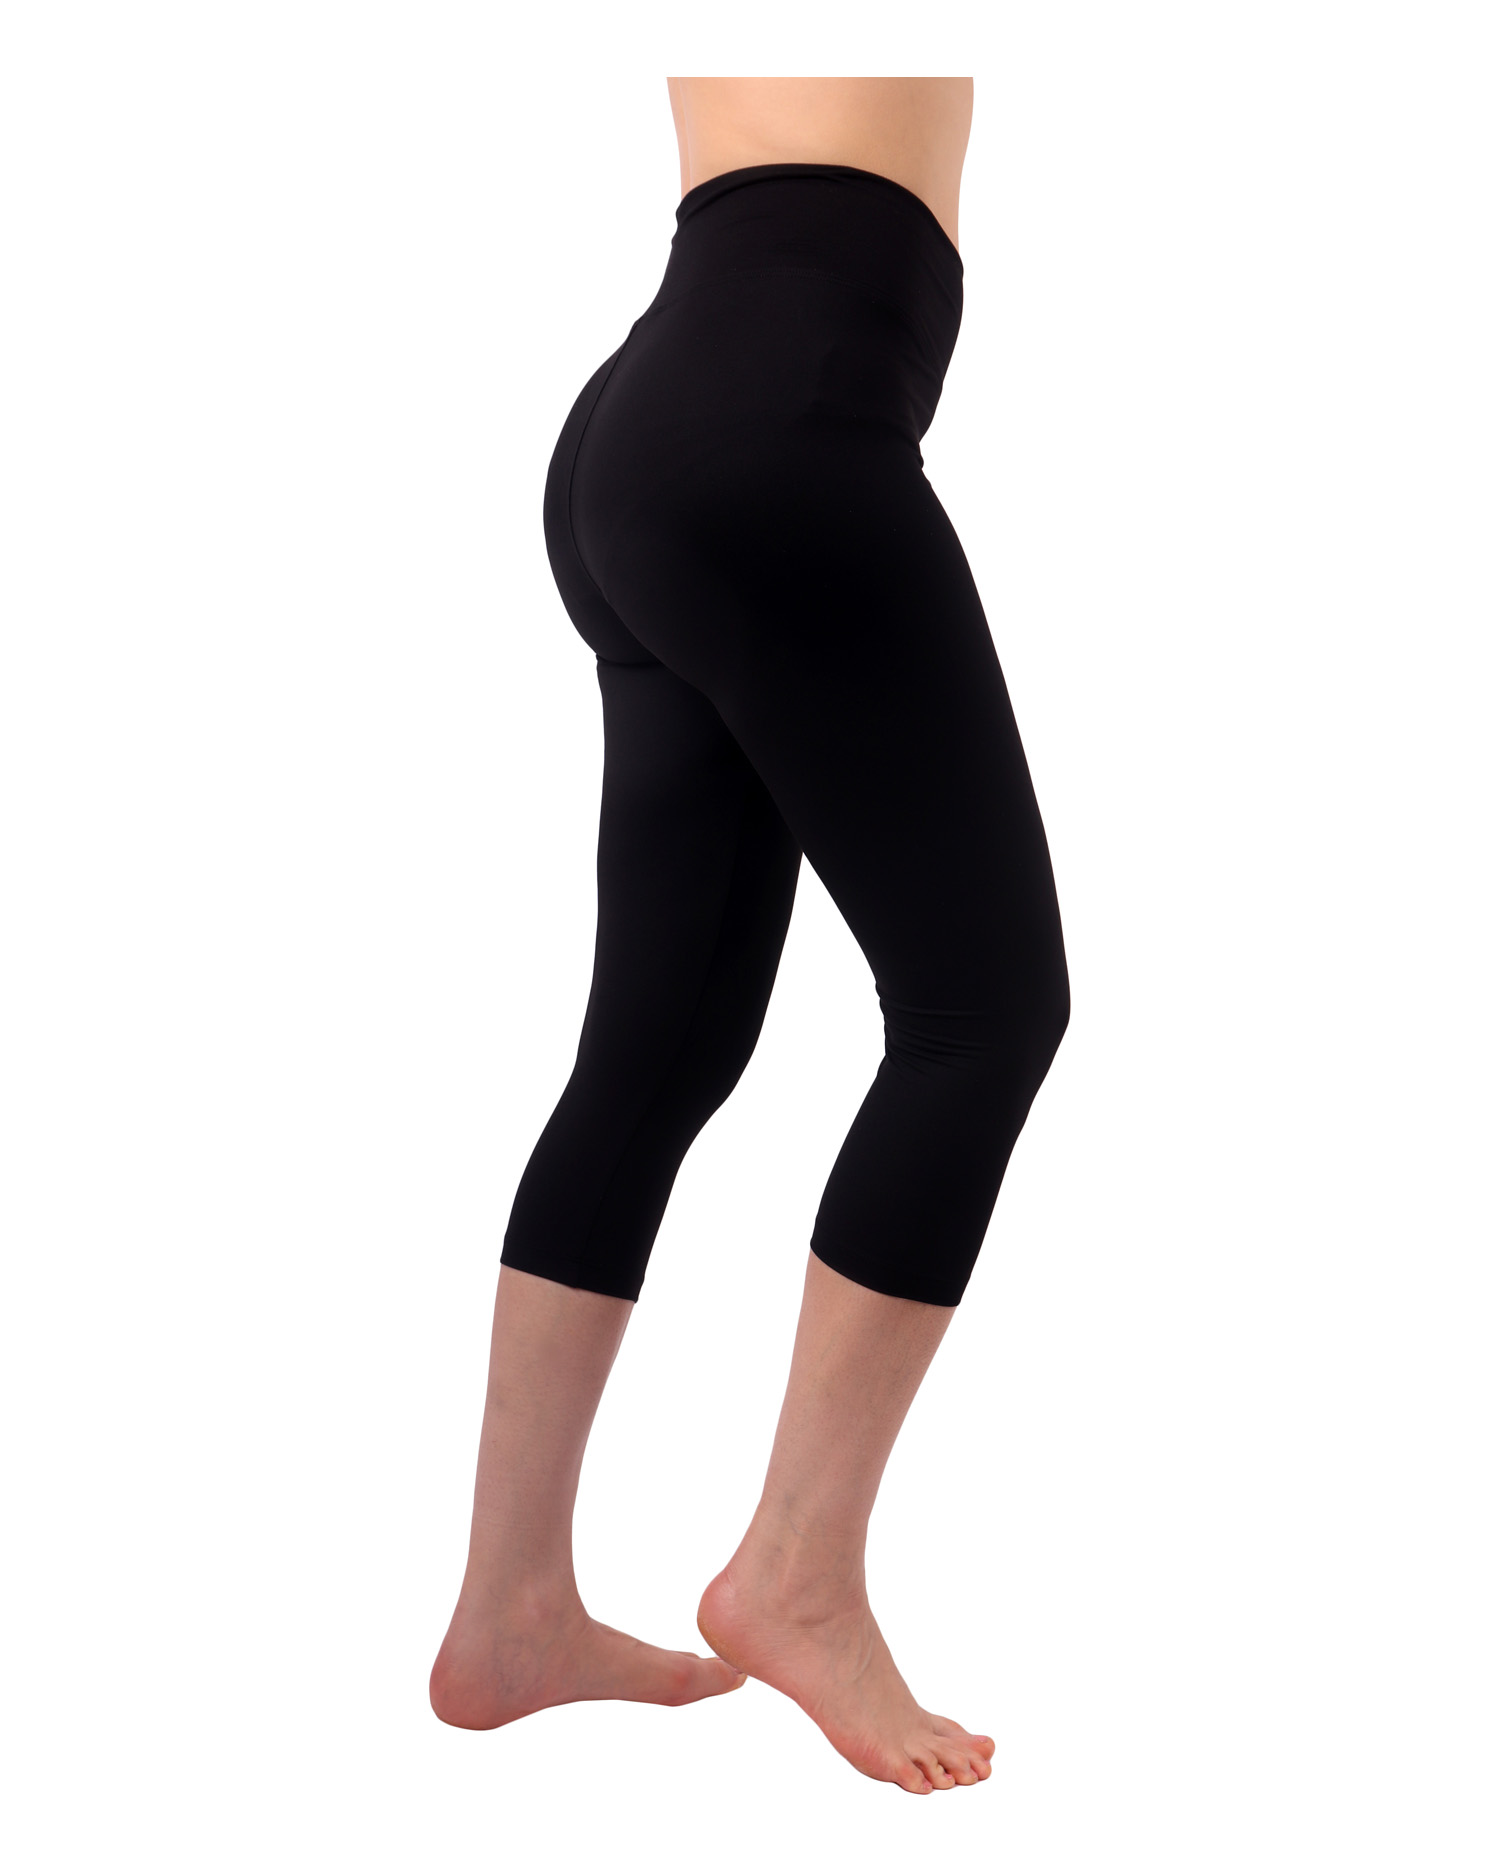 Women's 3/4 leggings with high waist, black